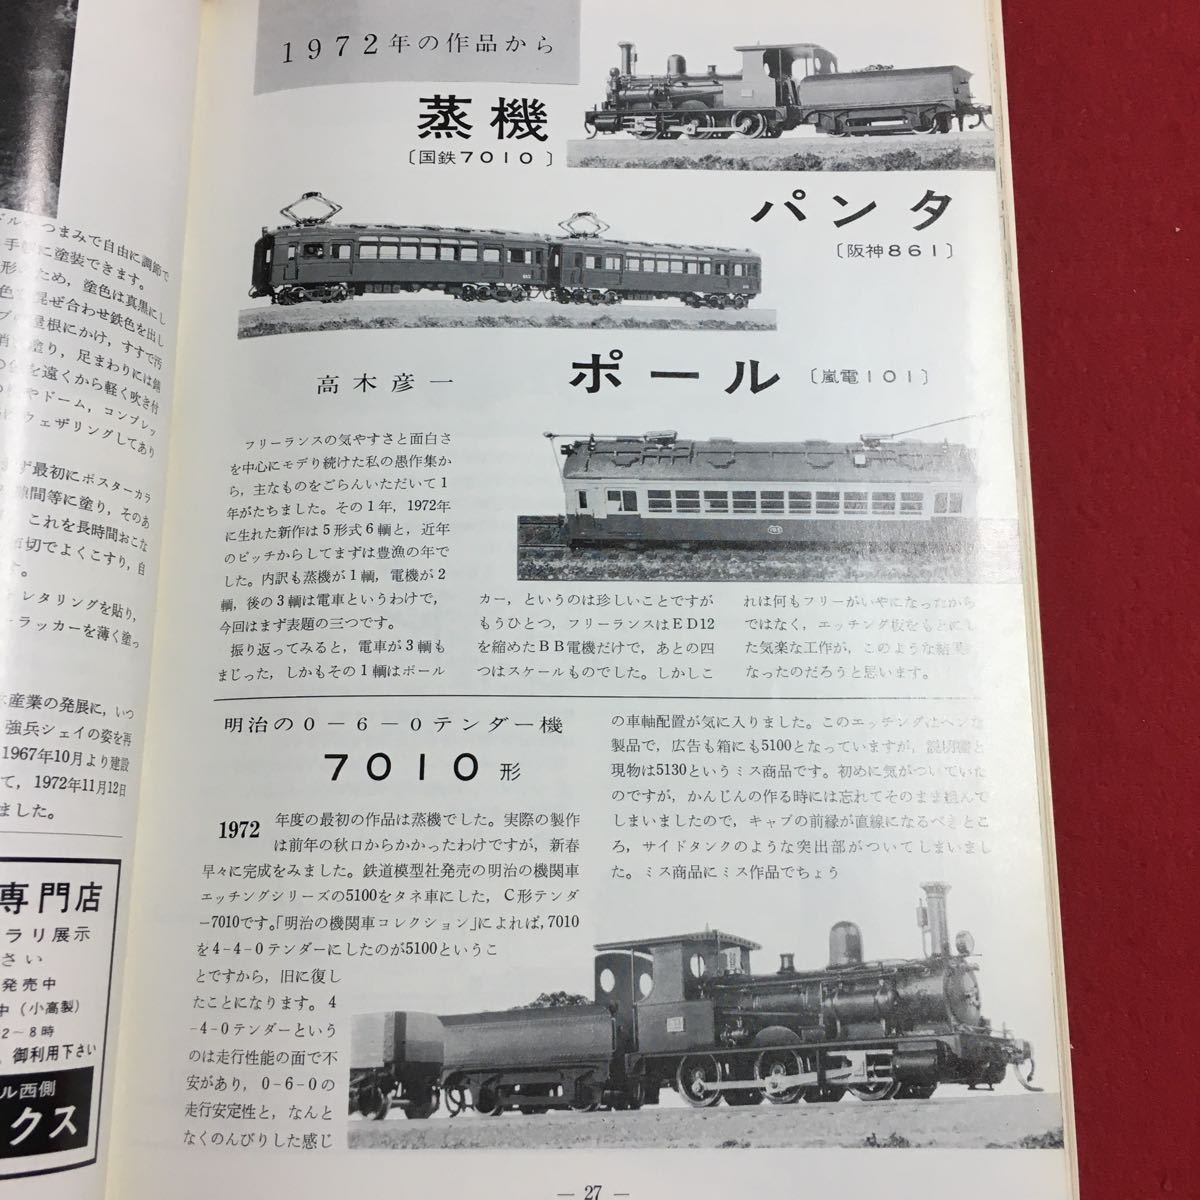 S7i-240 鉄道模型趣味 1973年5月号 No.299 昭和48年5月1日 発行 機芸出版社 雑誌 プラモデル 模型 鉄道 レイアウト ナハ11 ED54 ジオラマ_画像6